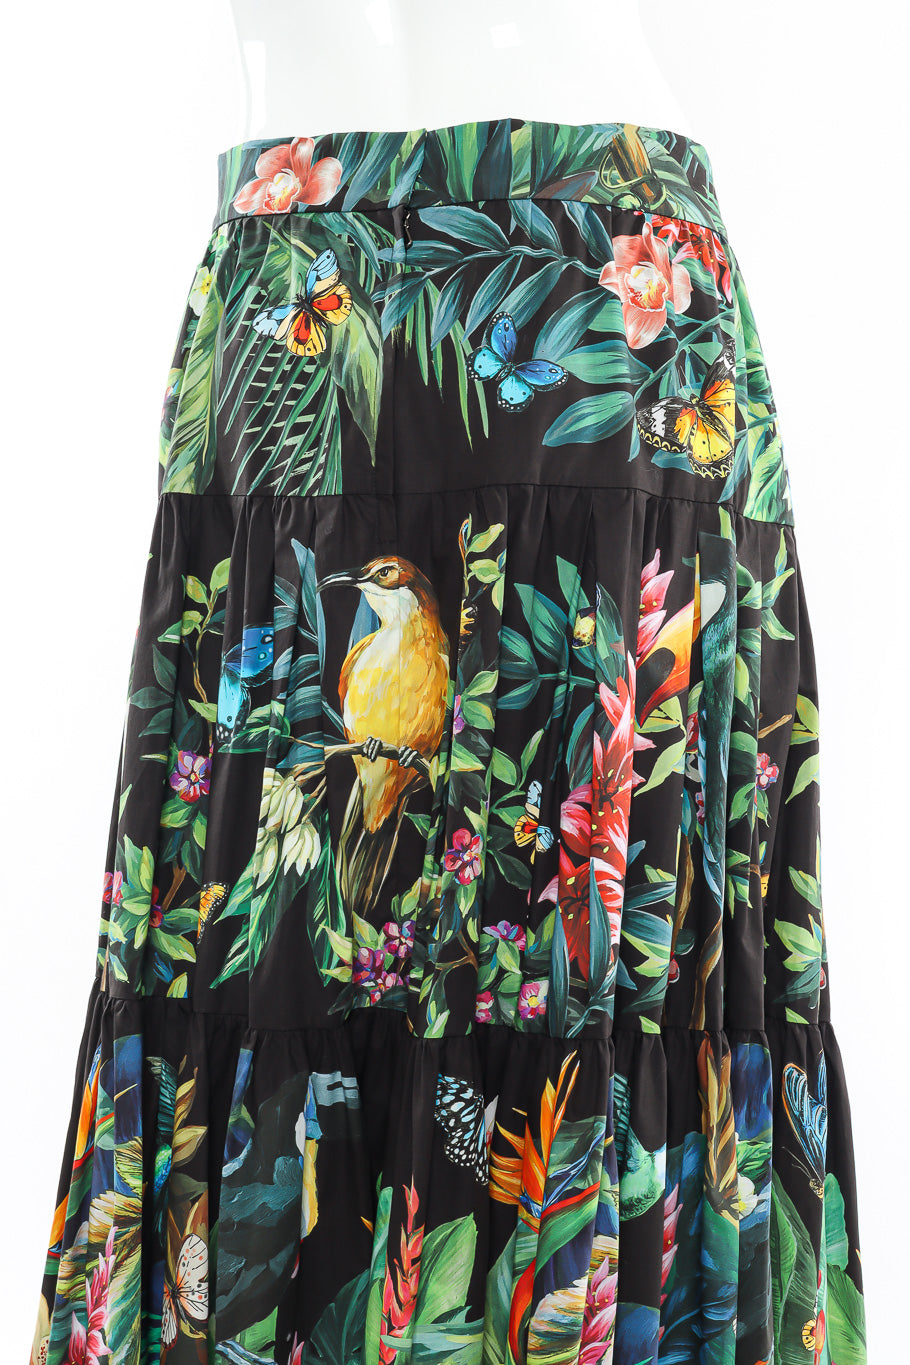 Dolce & Gabbana tiered jungle skirt on mannequin @recessla